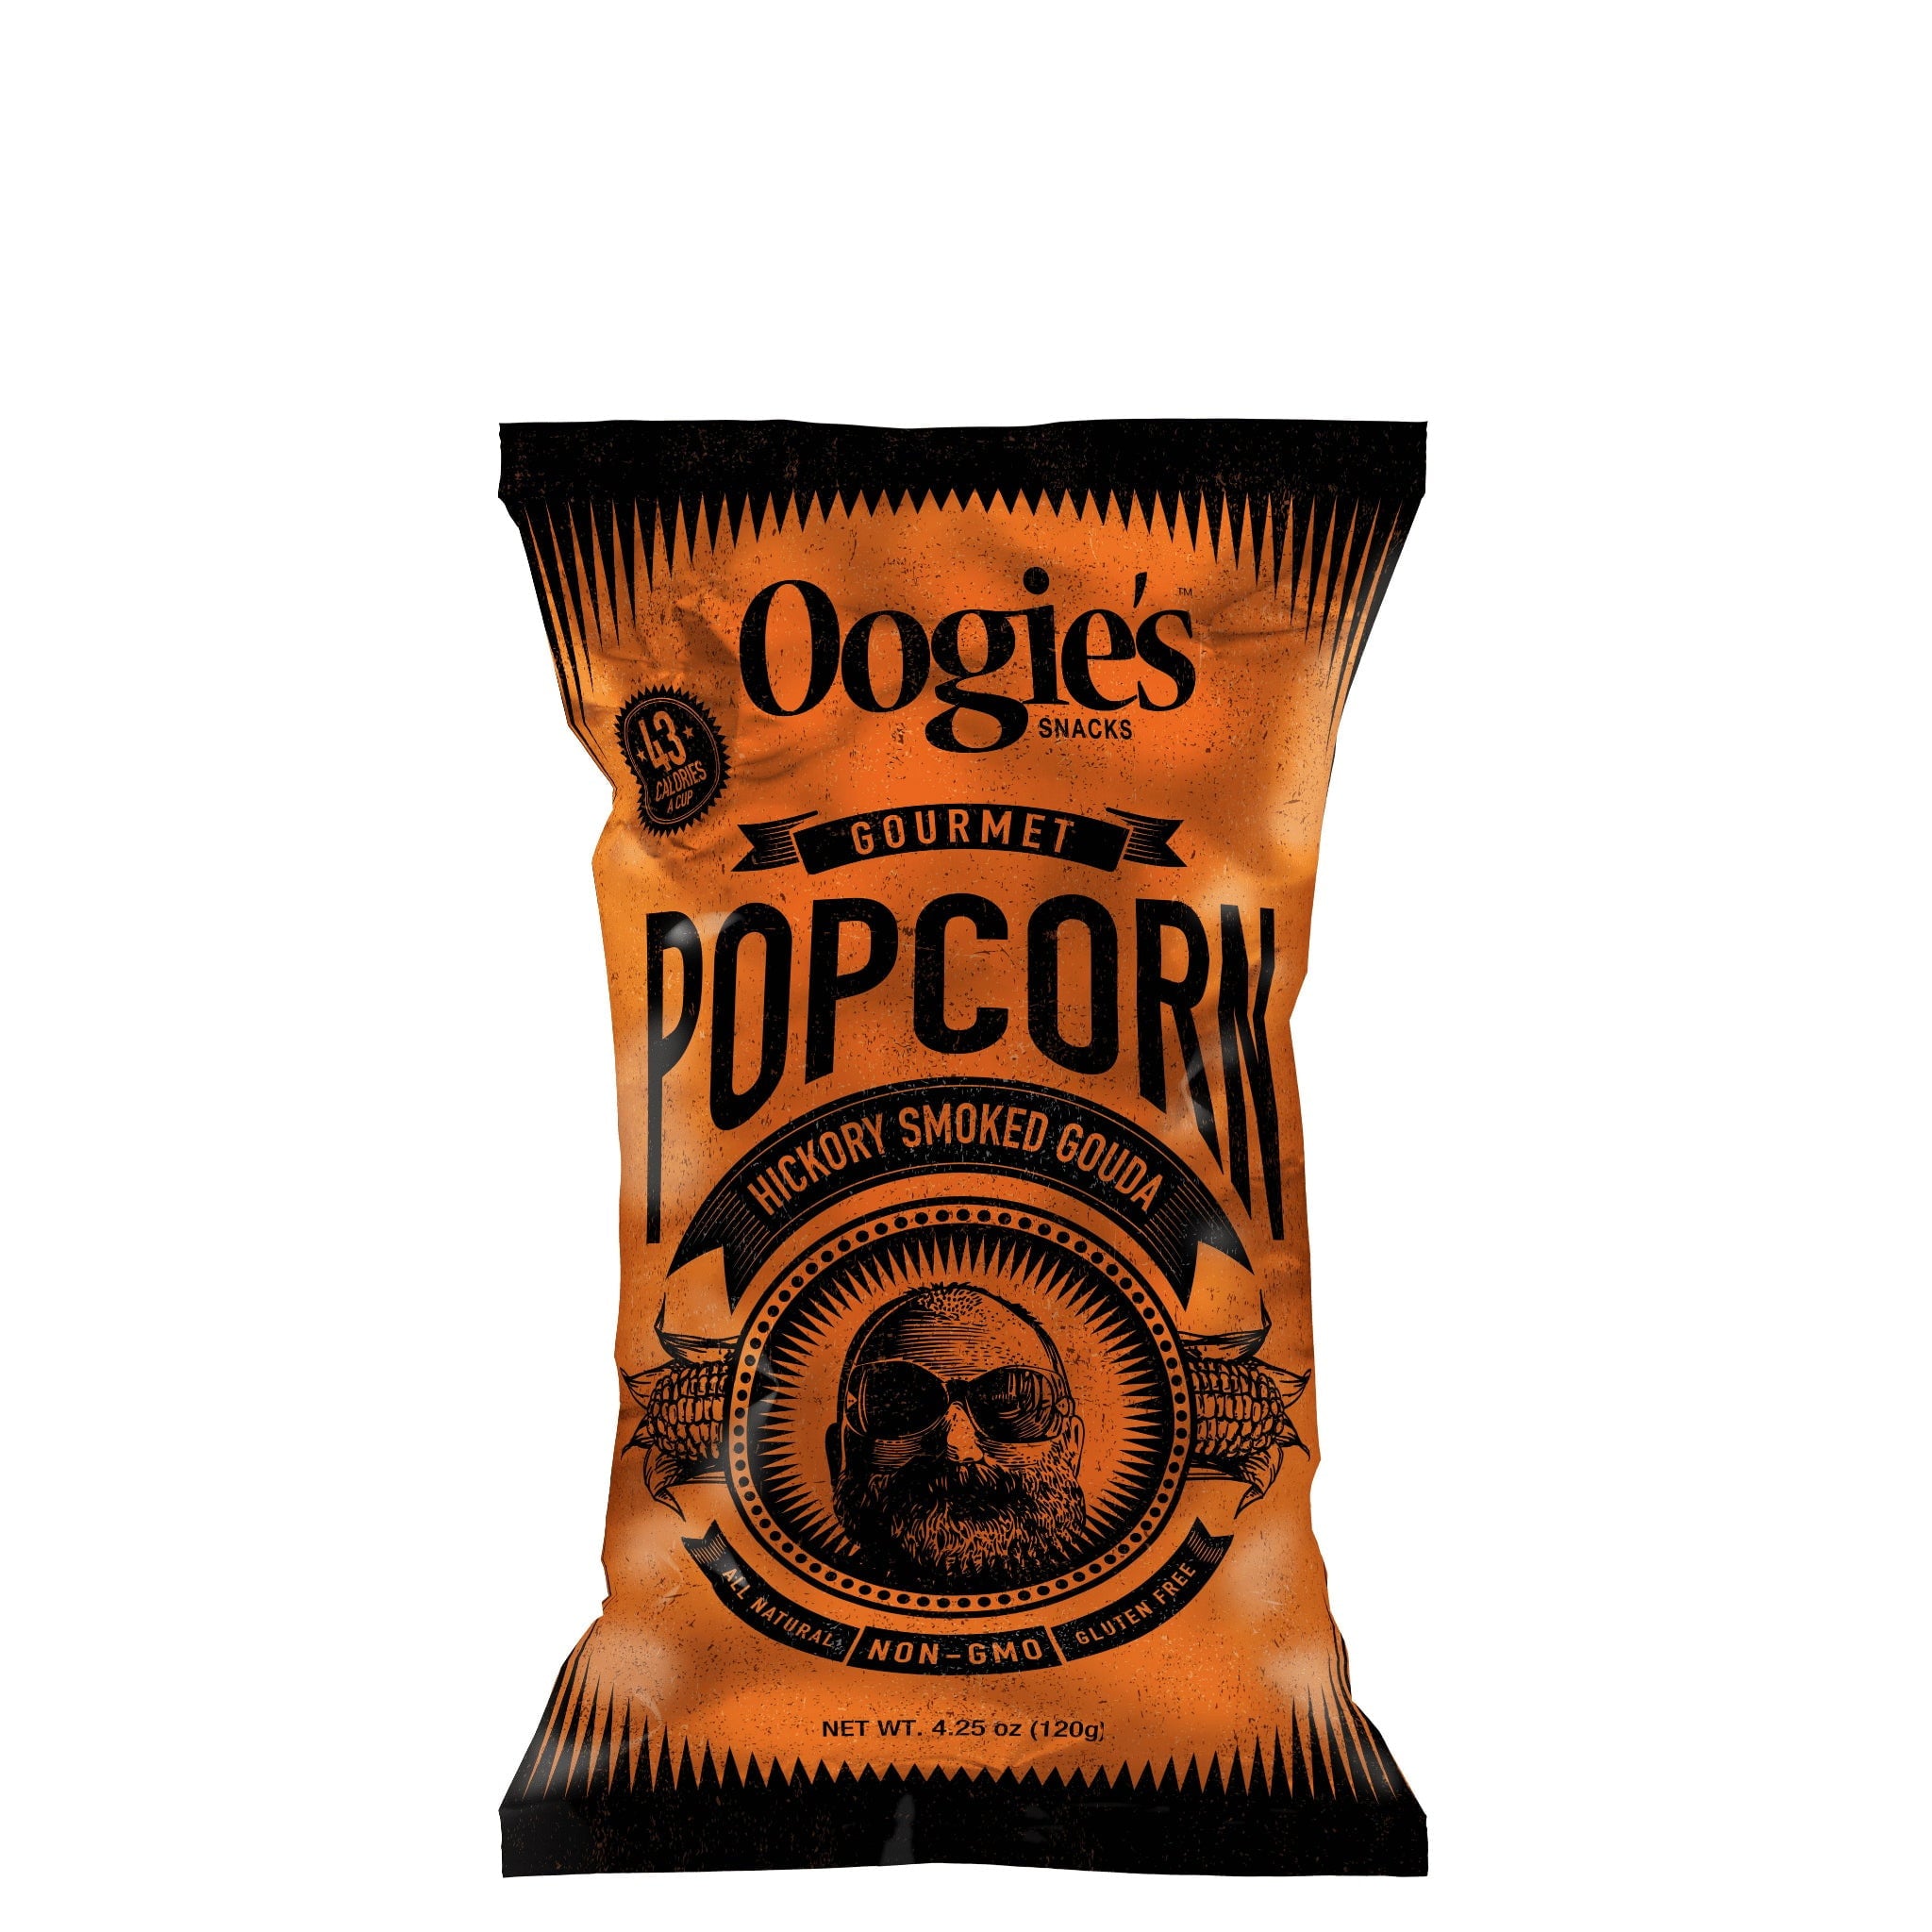 Hickory smoked gouda popcorn bag